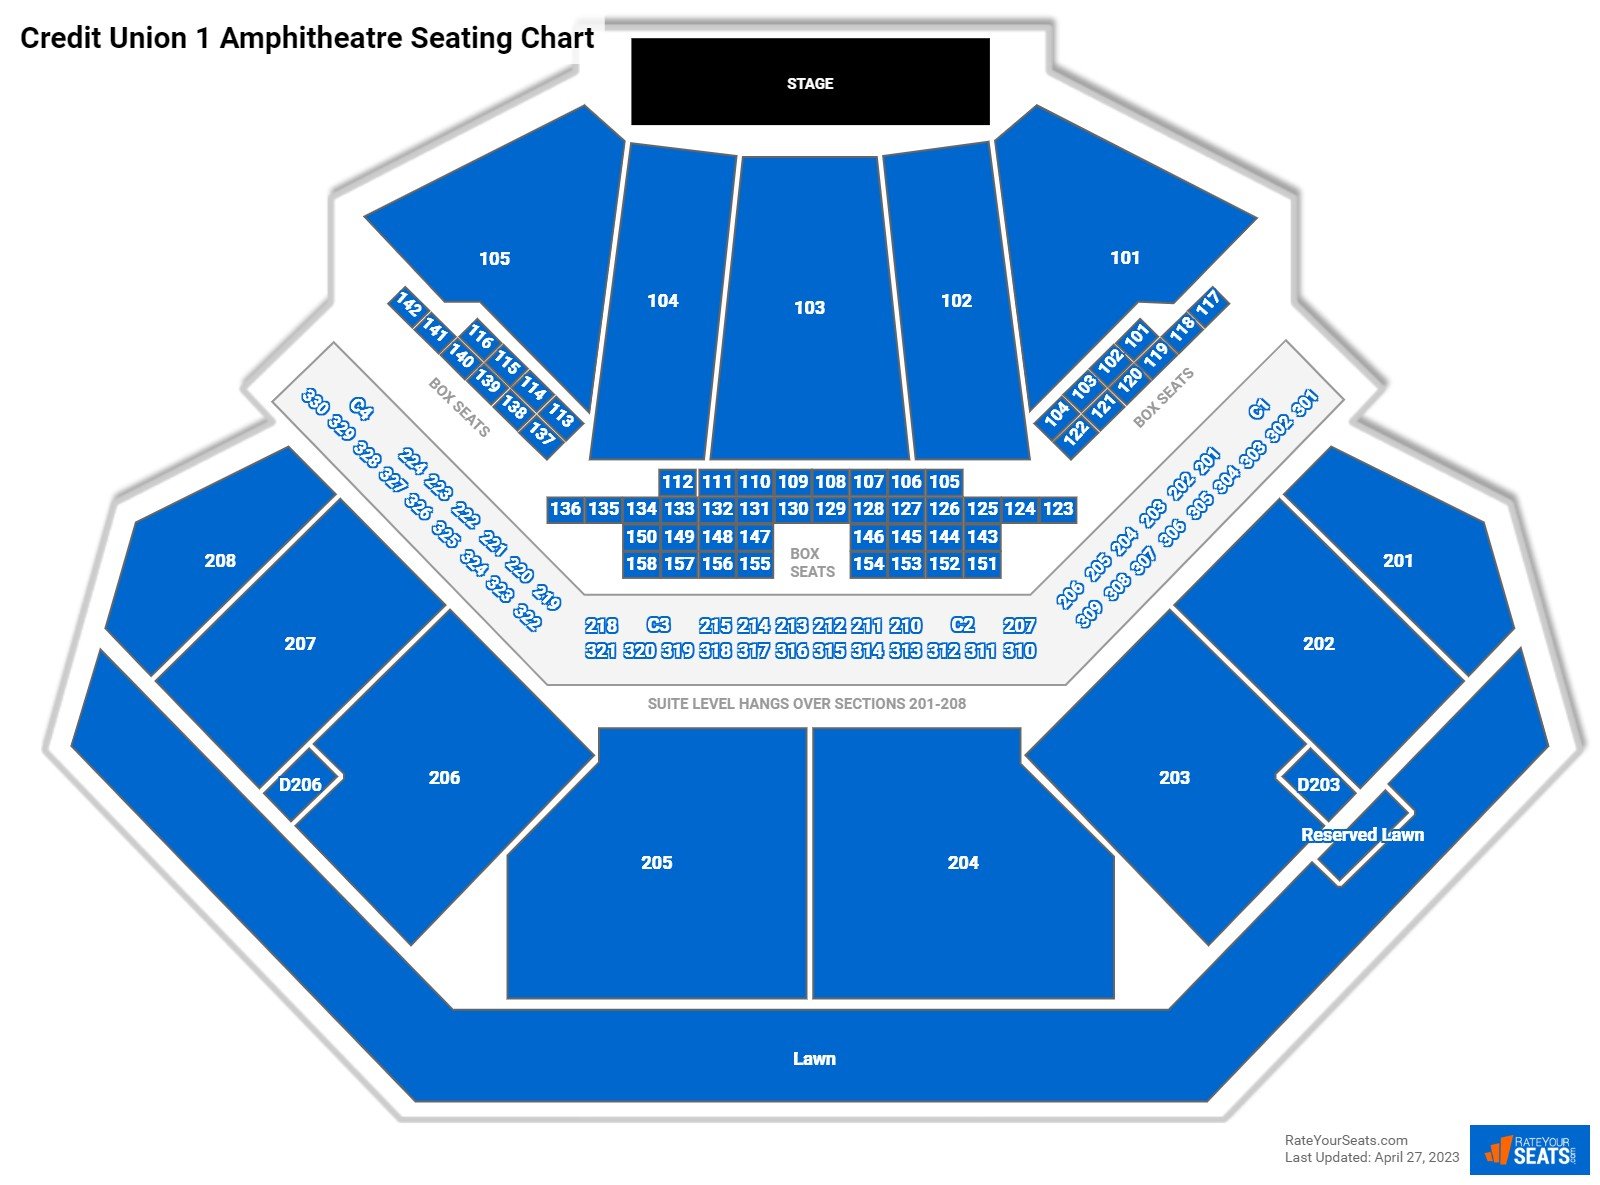 Credit Union 1 Amphitheatre Concert Seating Chart